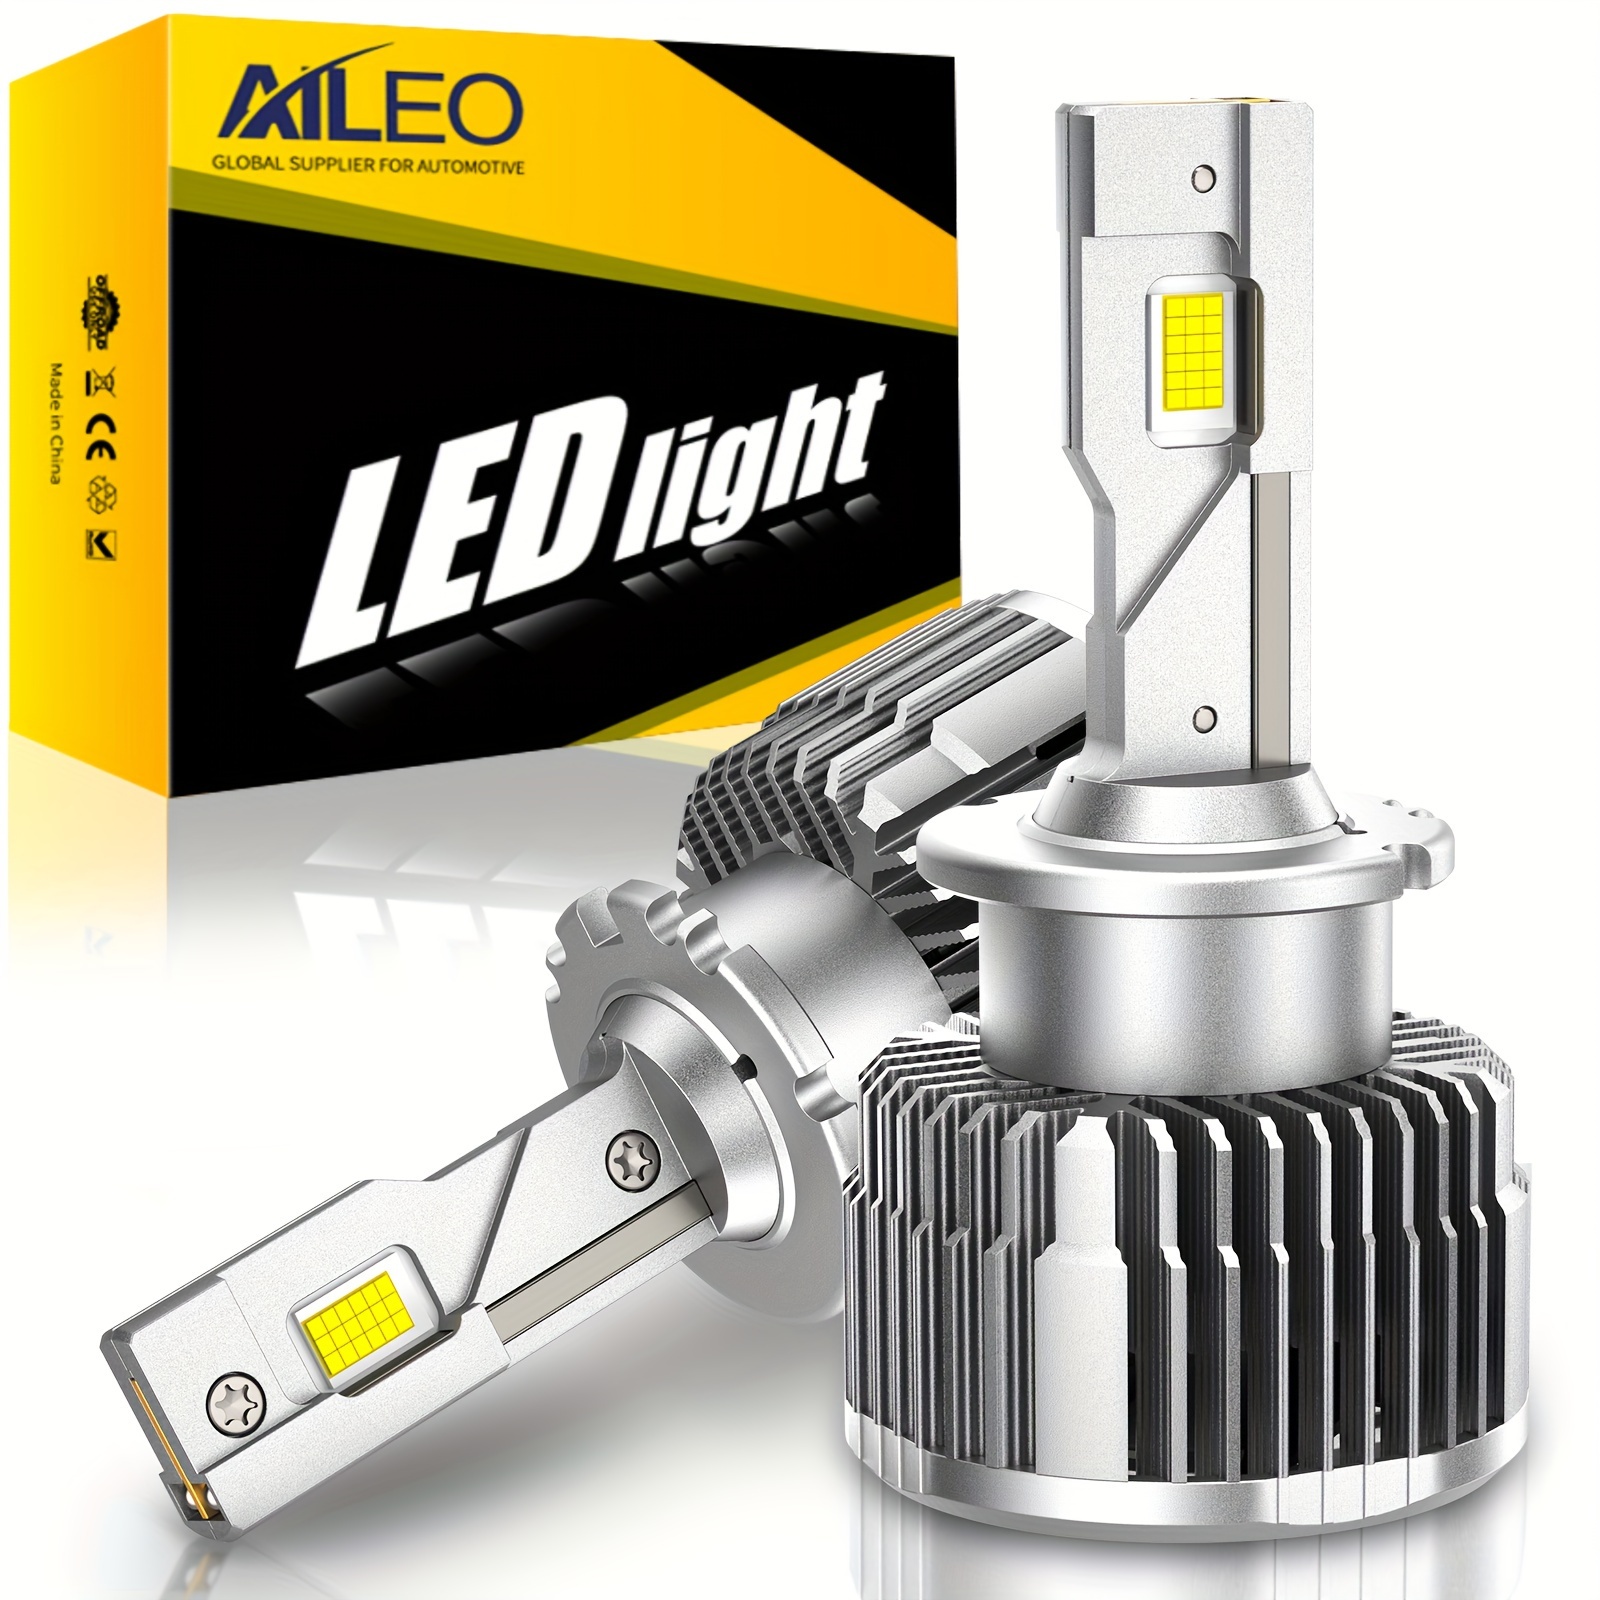 INFITARY H7 LED Headlight Bulbs Canbus Error Free 55W 26000LM 6000K CSP Car